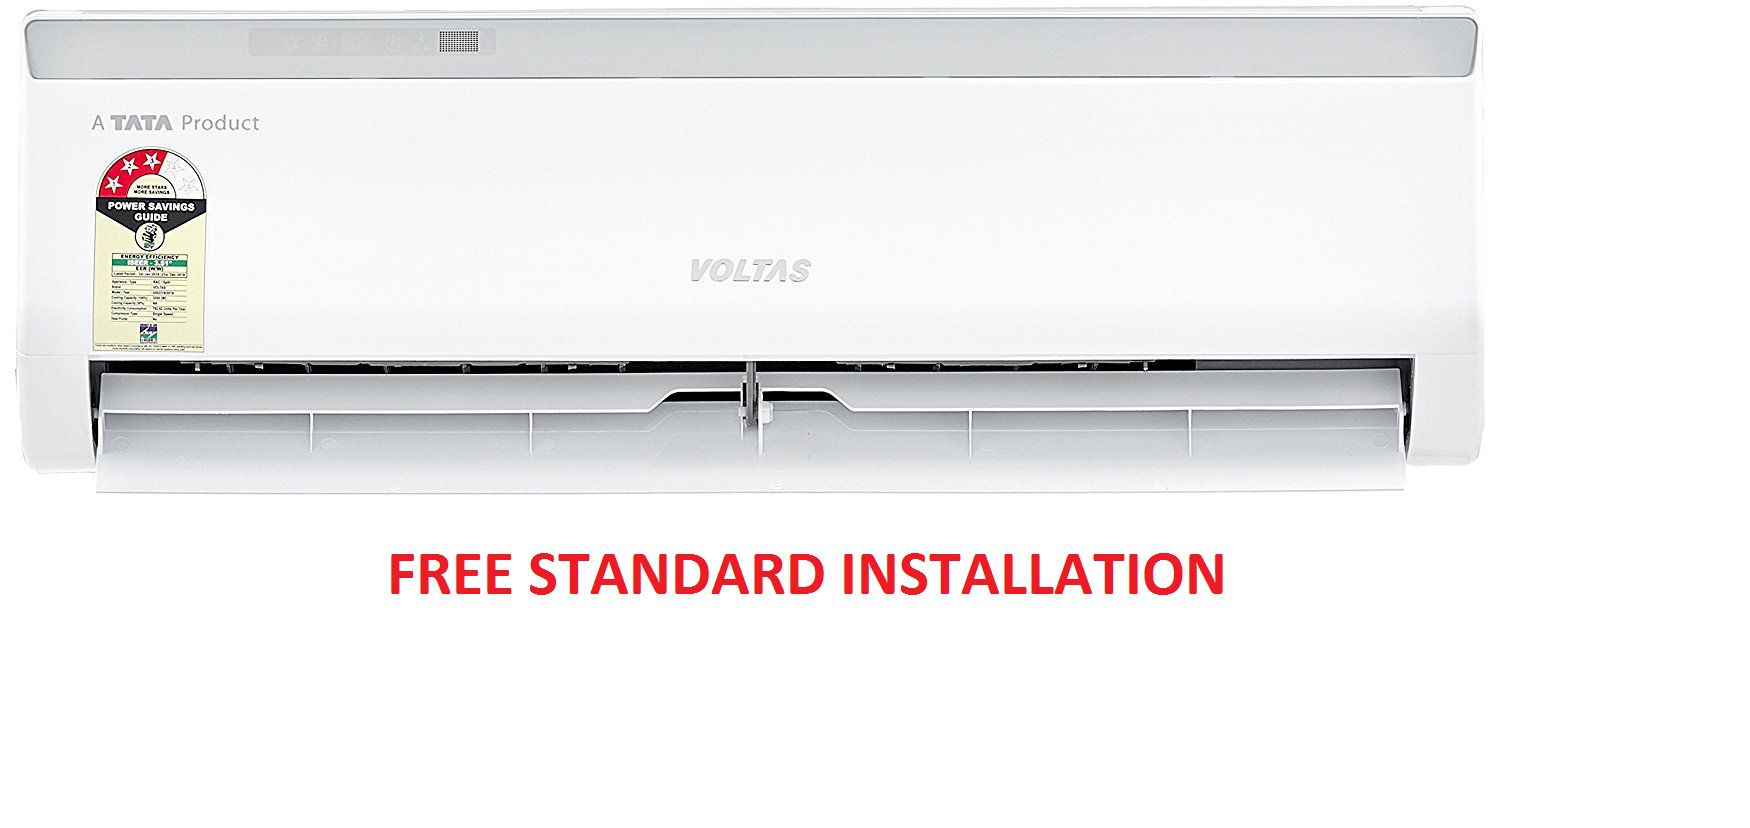 Voltas 1 Ton 3 Star 123 CZA Split Air Conditioner (2018 Model) Free Standard Installation